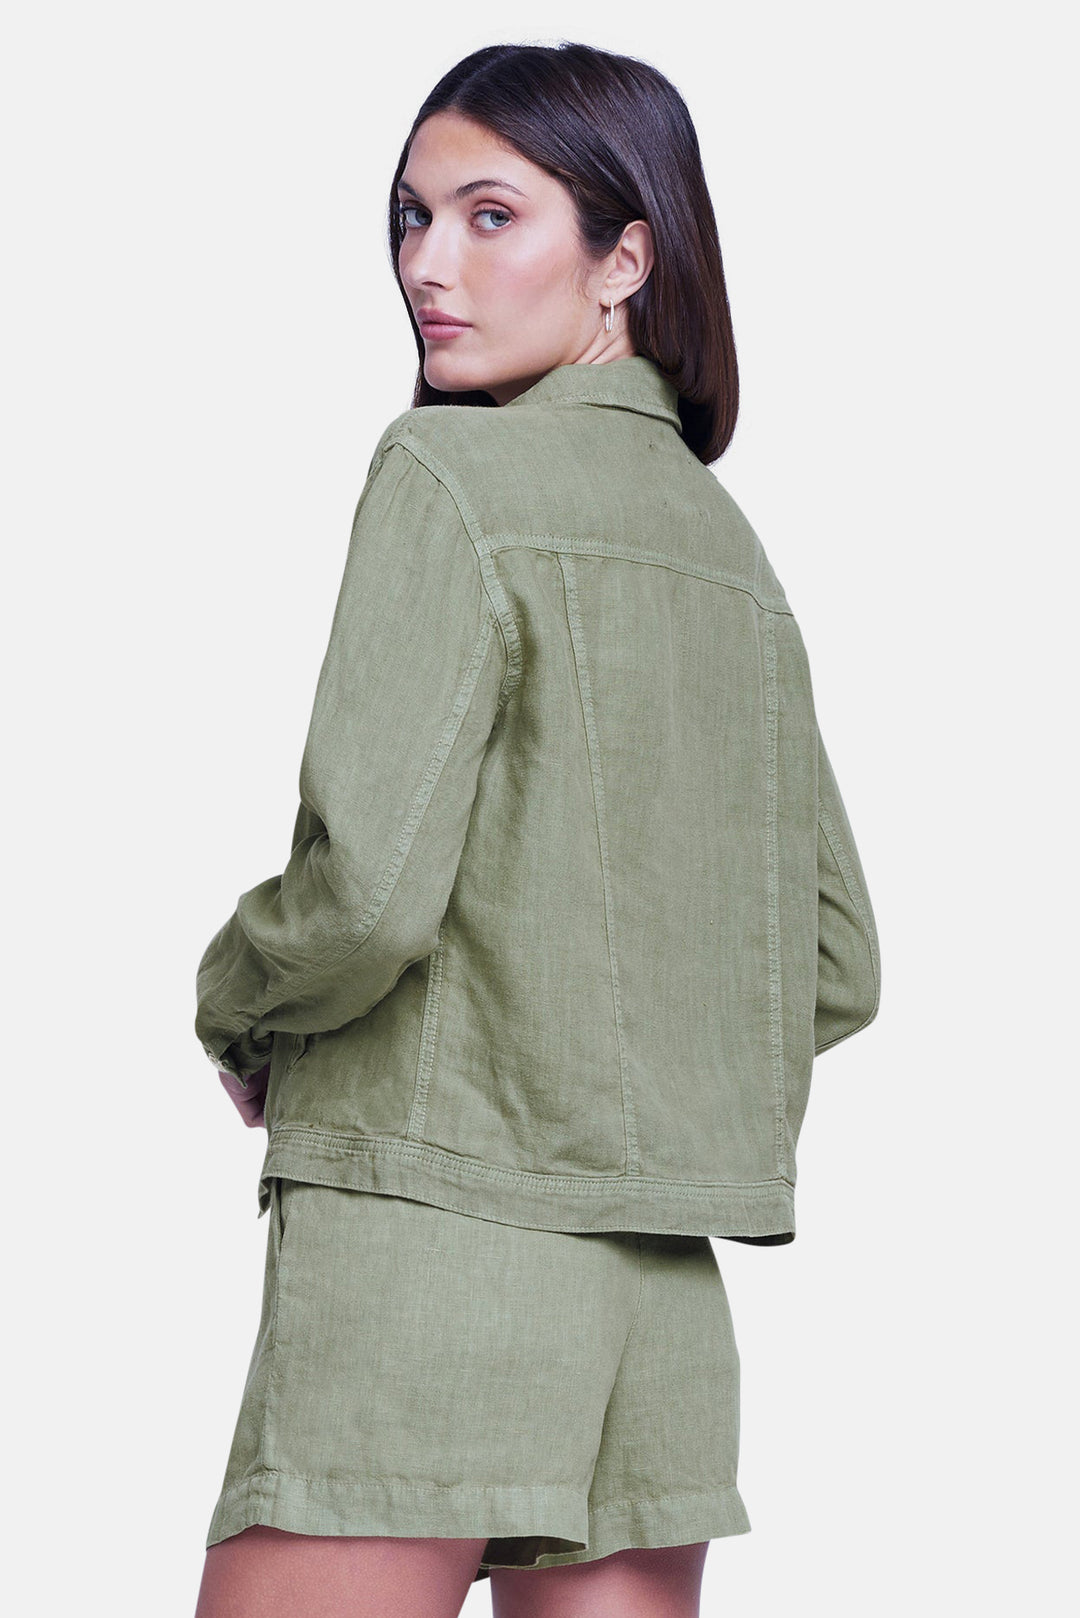 Celine Linen Jacket Soft Army